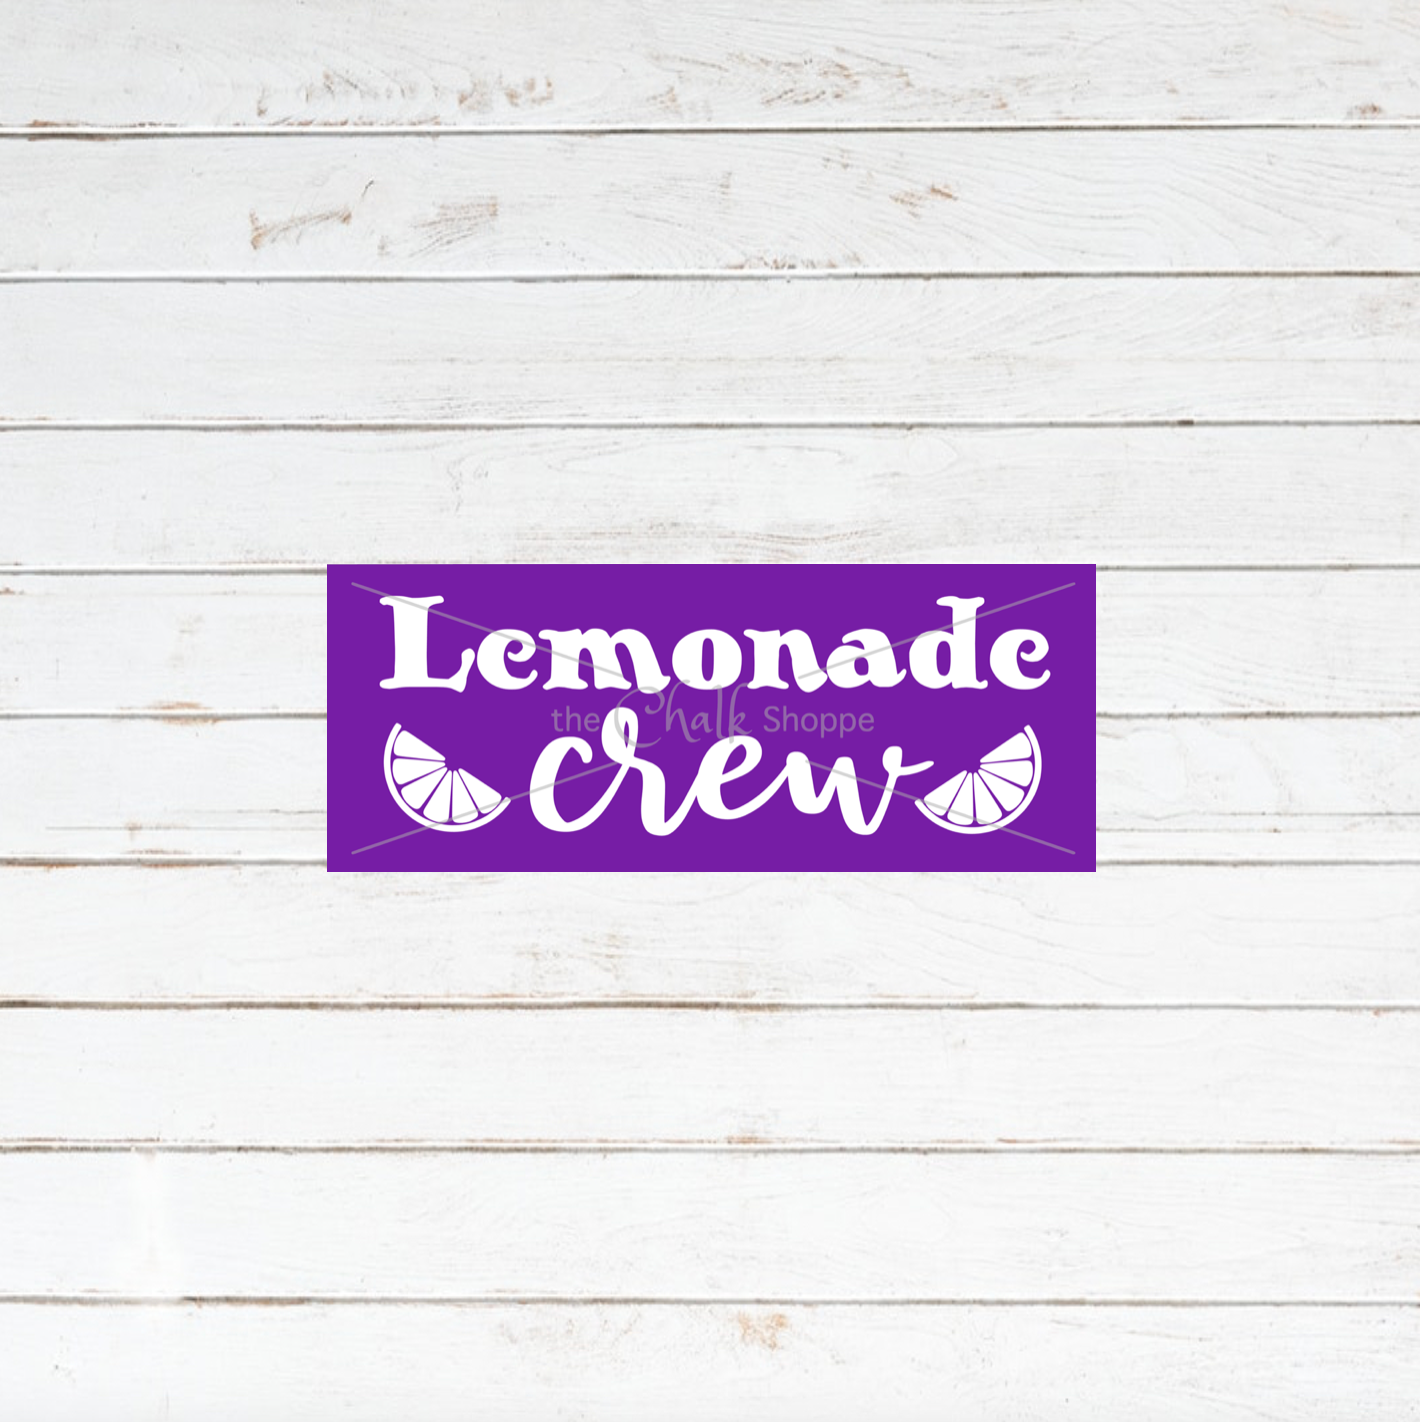 Lemonade Crew